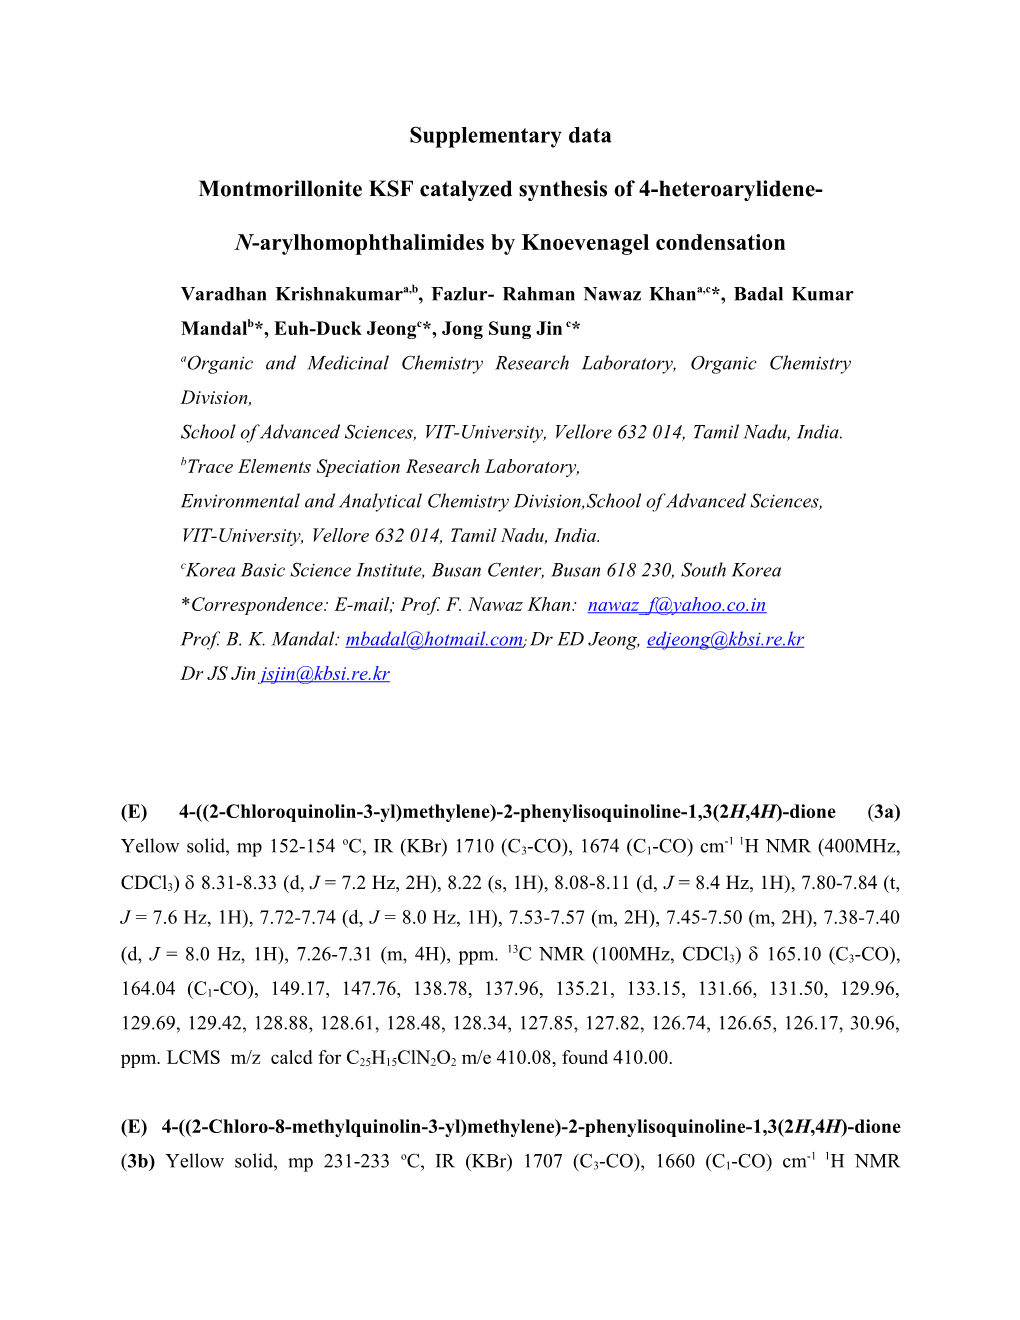 Montmorillonite KSF Catalyzed Synthesis of 4-Heteroarylidene